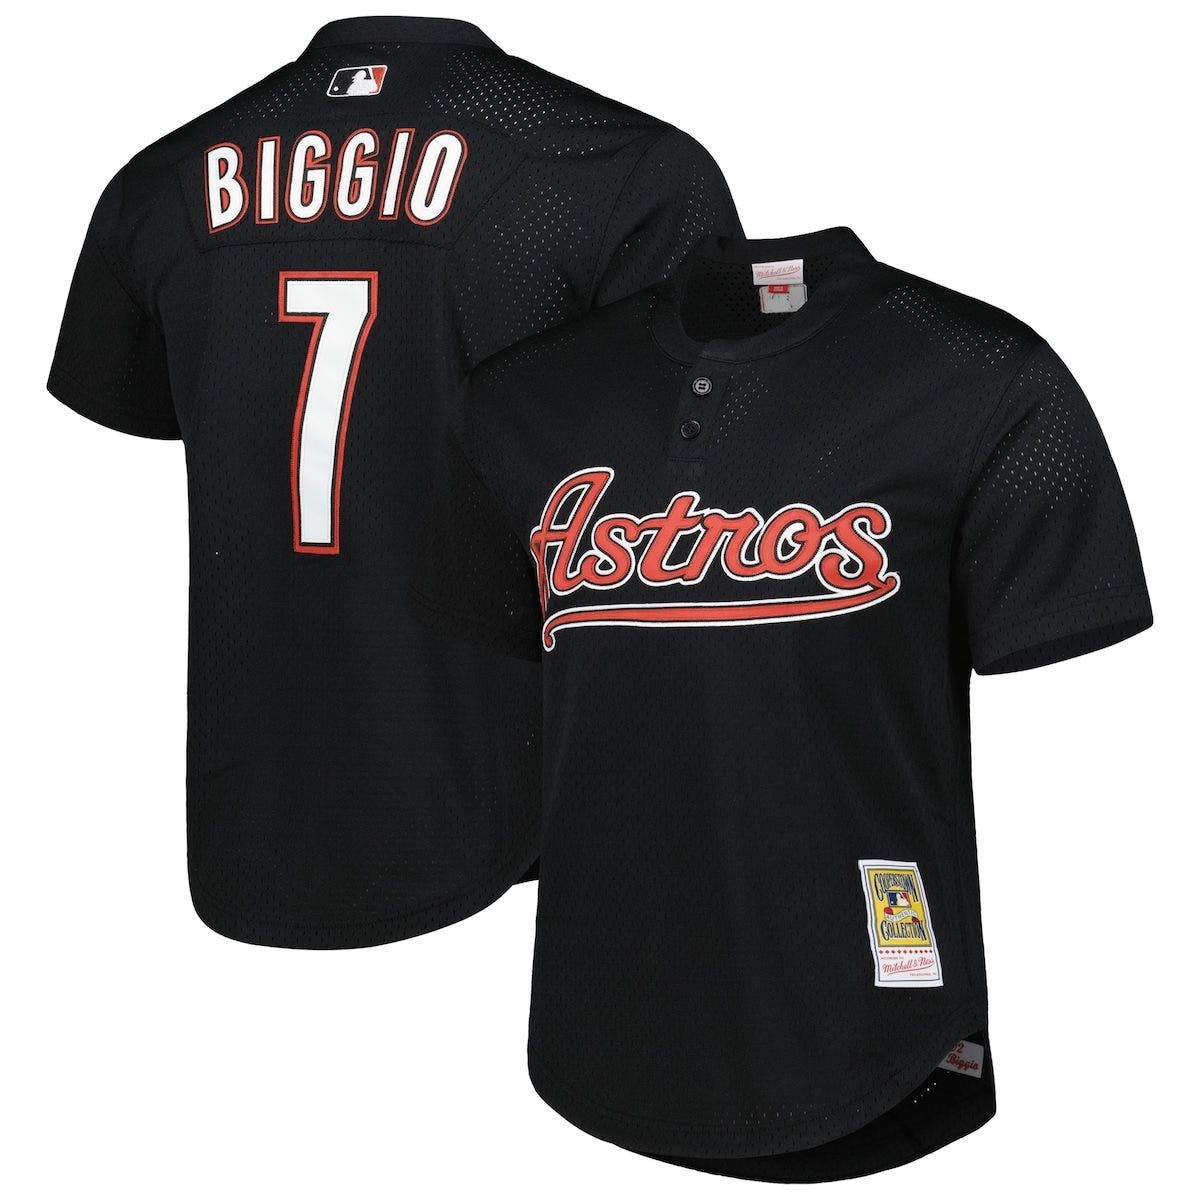 Craig Biggio Jersey - 2004 Houston Astros Home Throwback Baseball